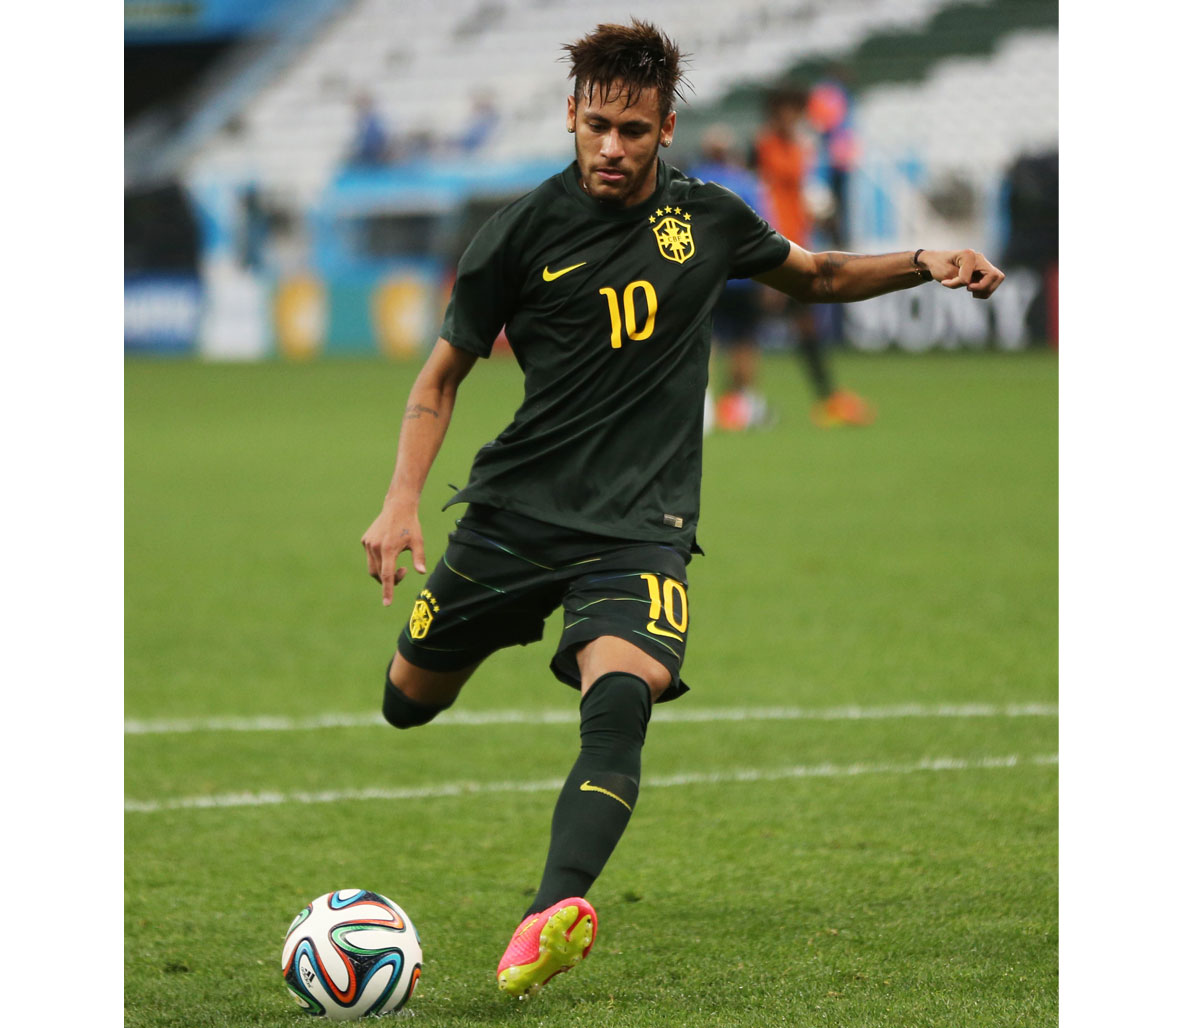 brazil neymar football soccer player free hd kick ball mobile desktop bakground download wallpaper images